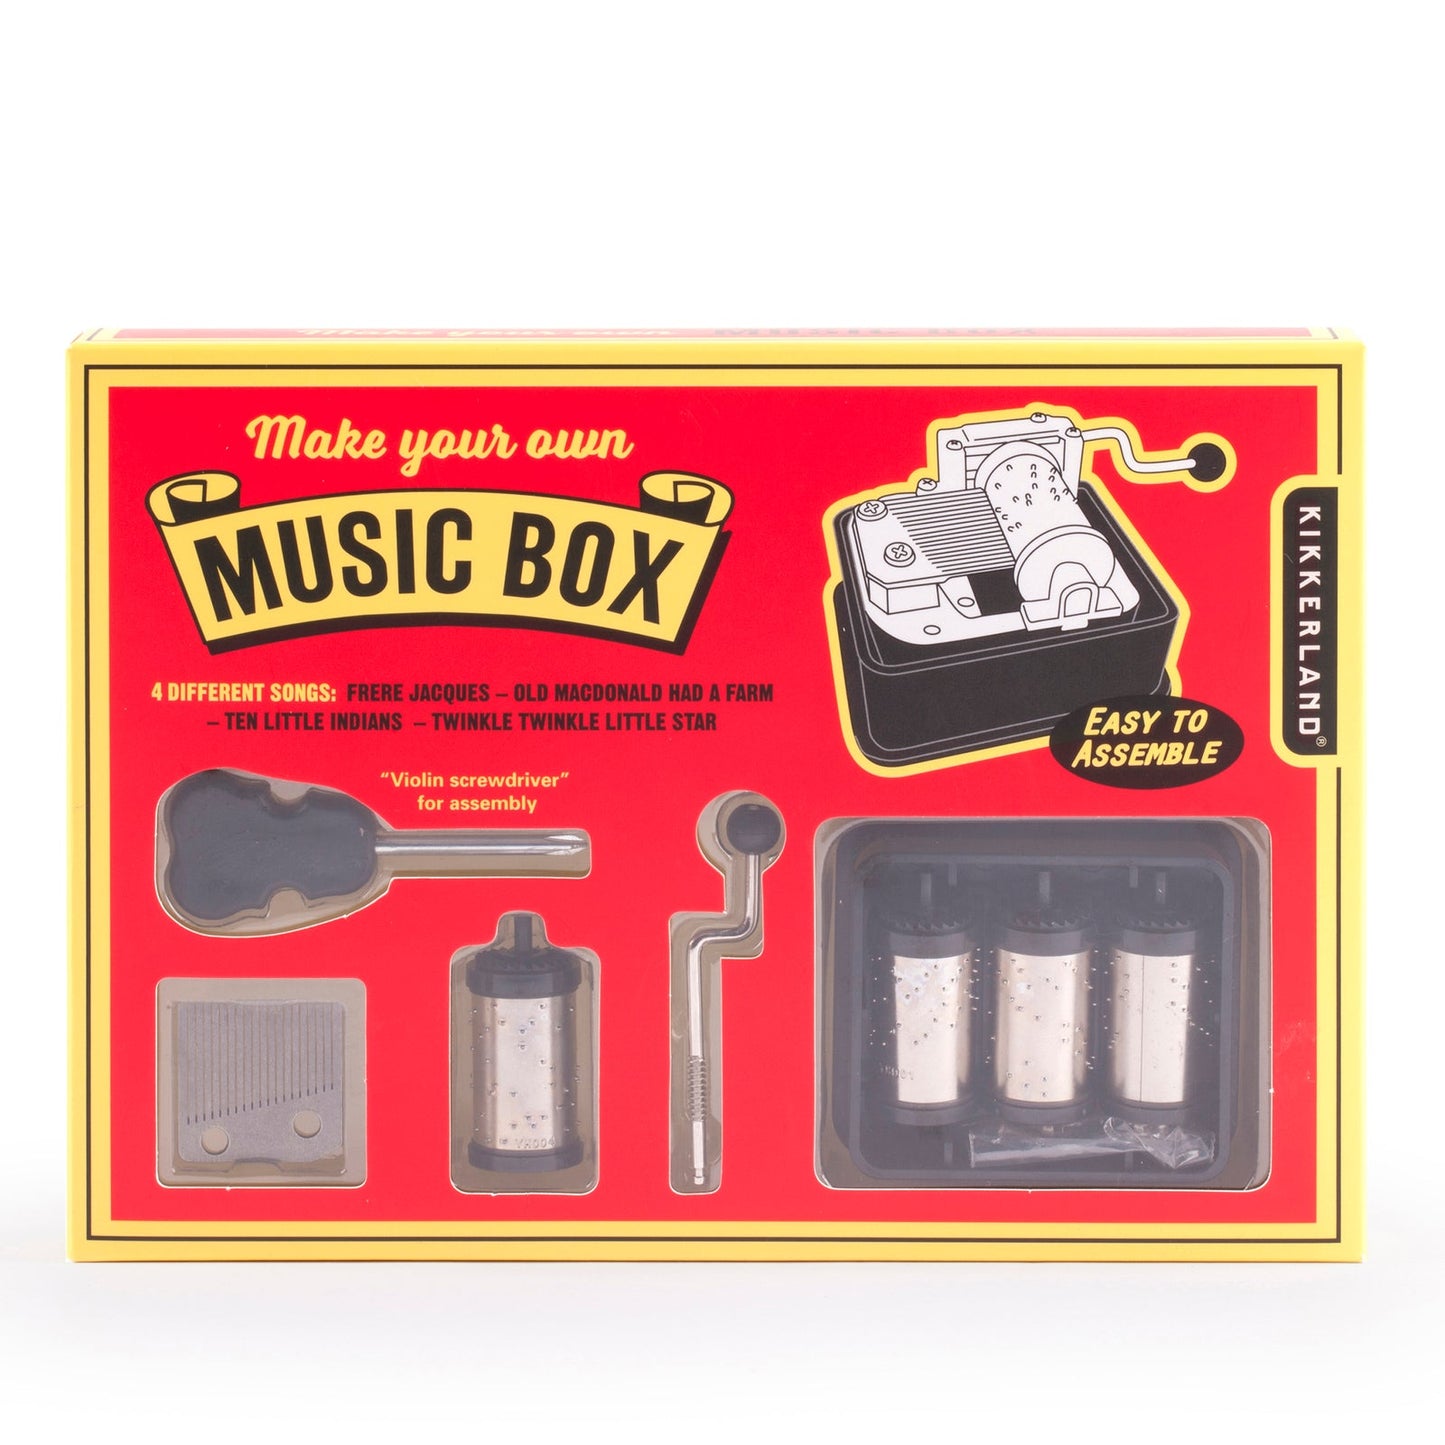 Build your own music box activity set